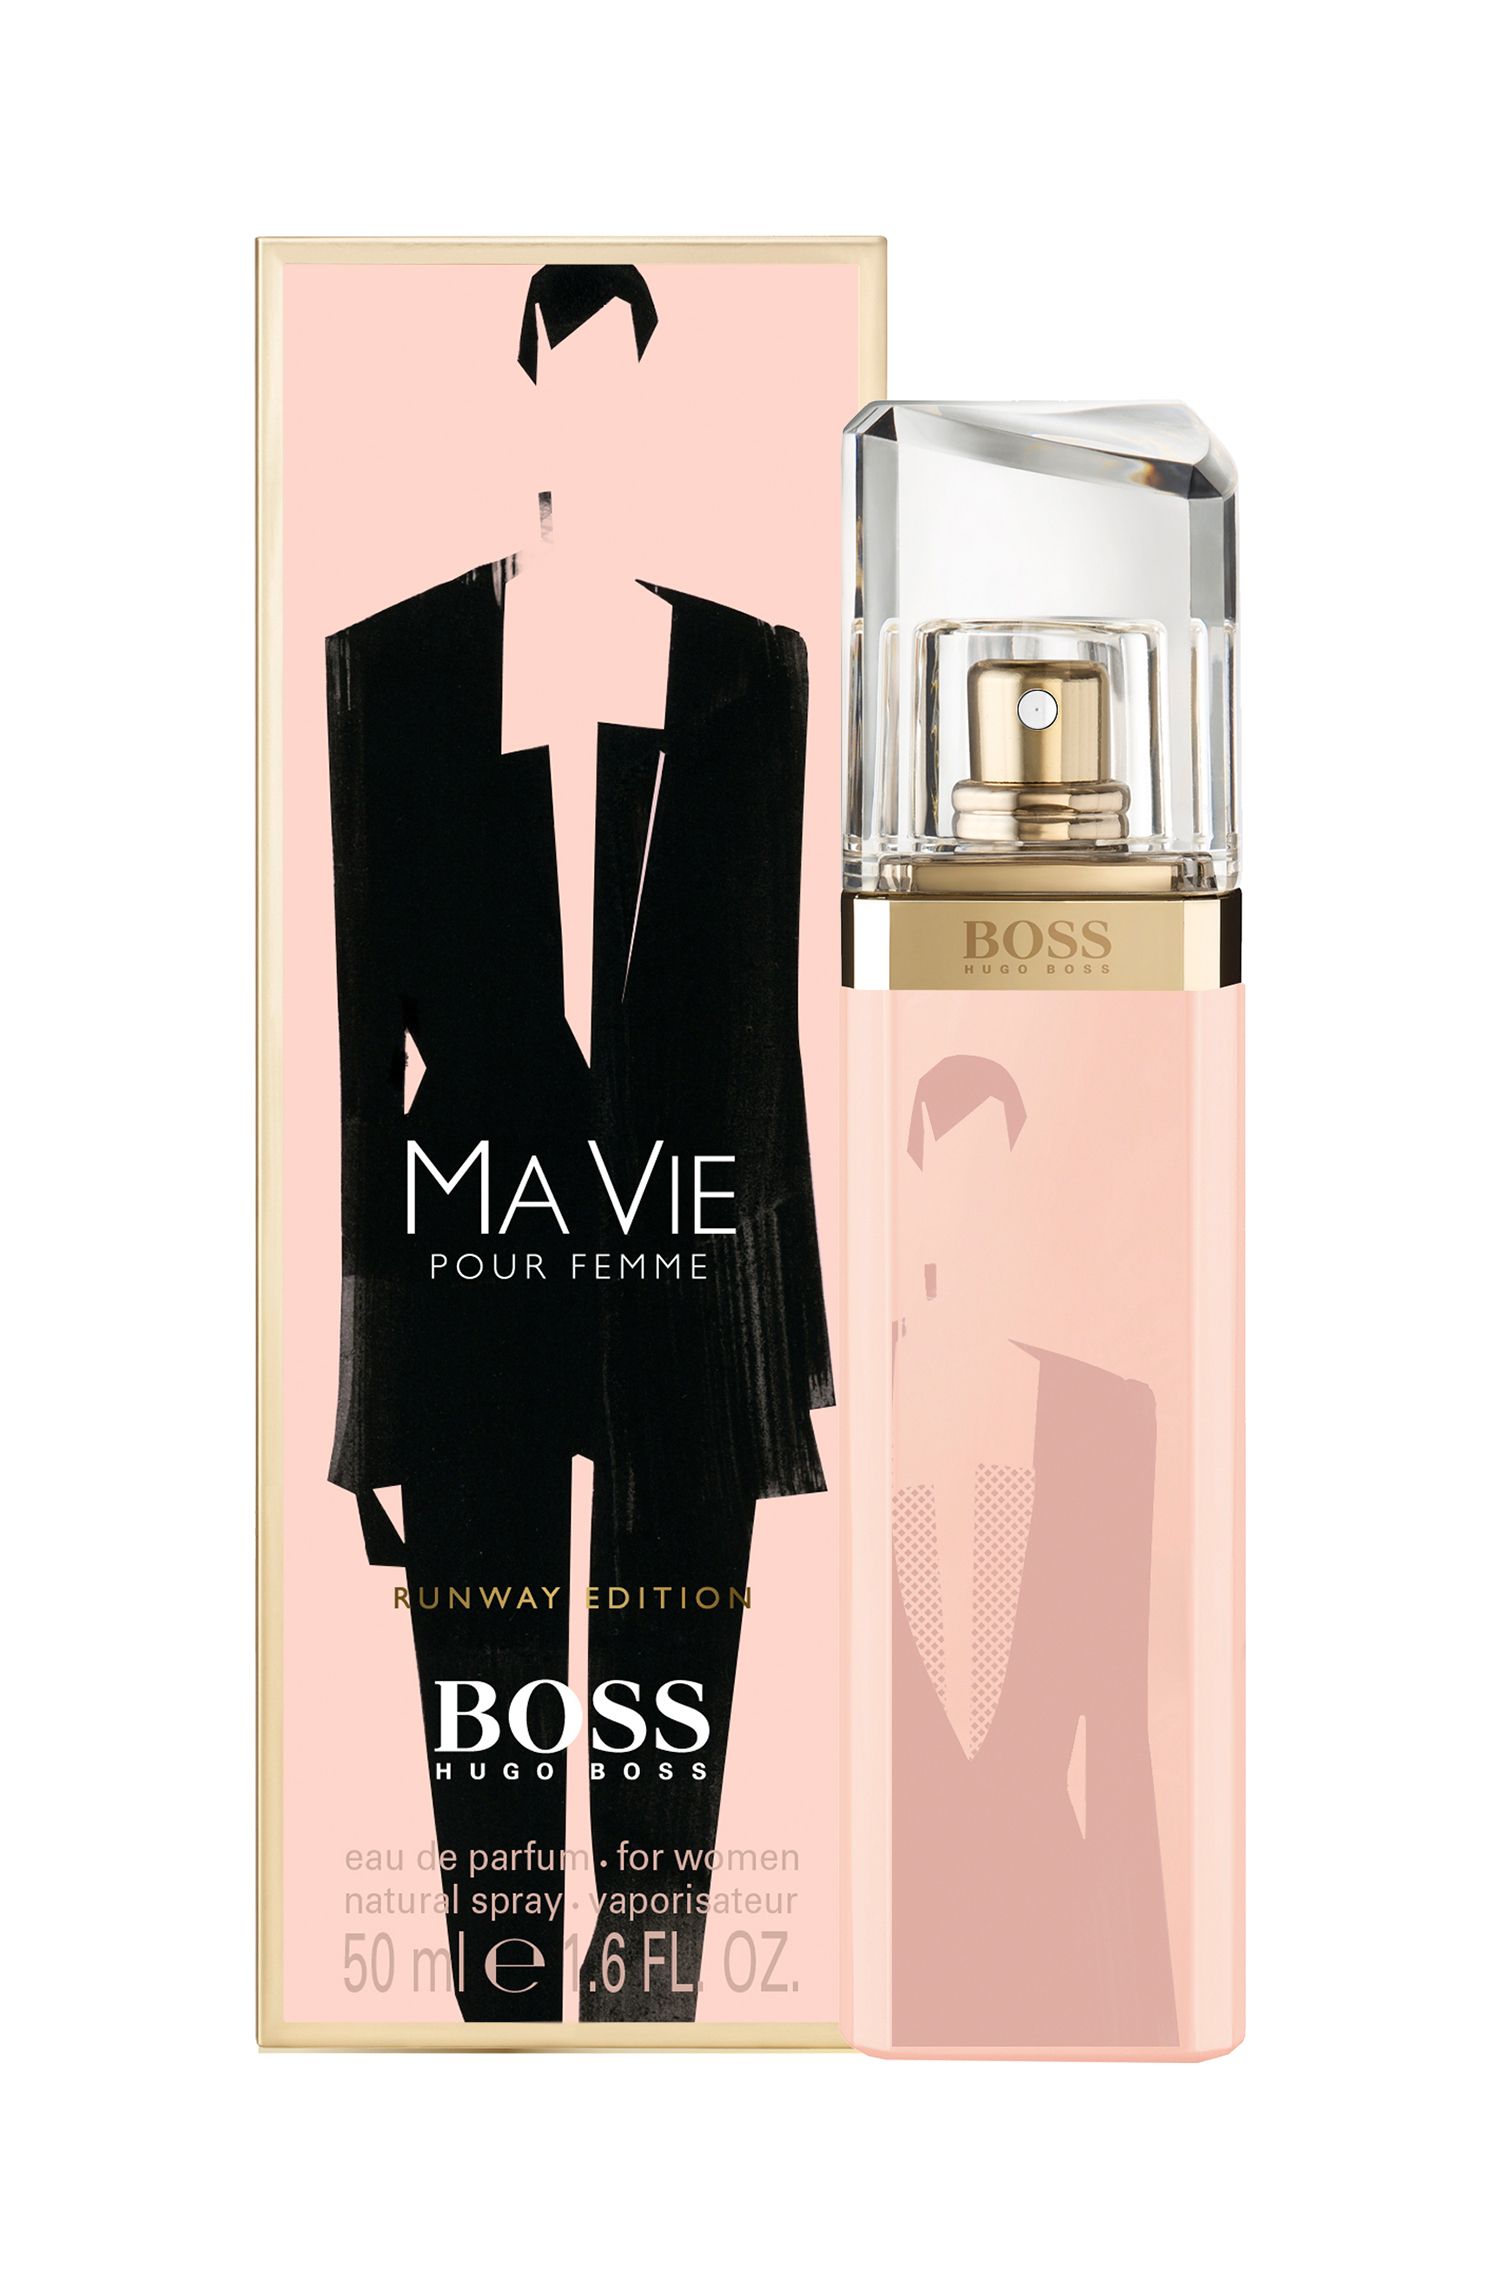 Hugo Boss Boss Ma Vie Pour Femme Runway Edition